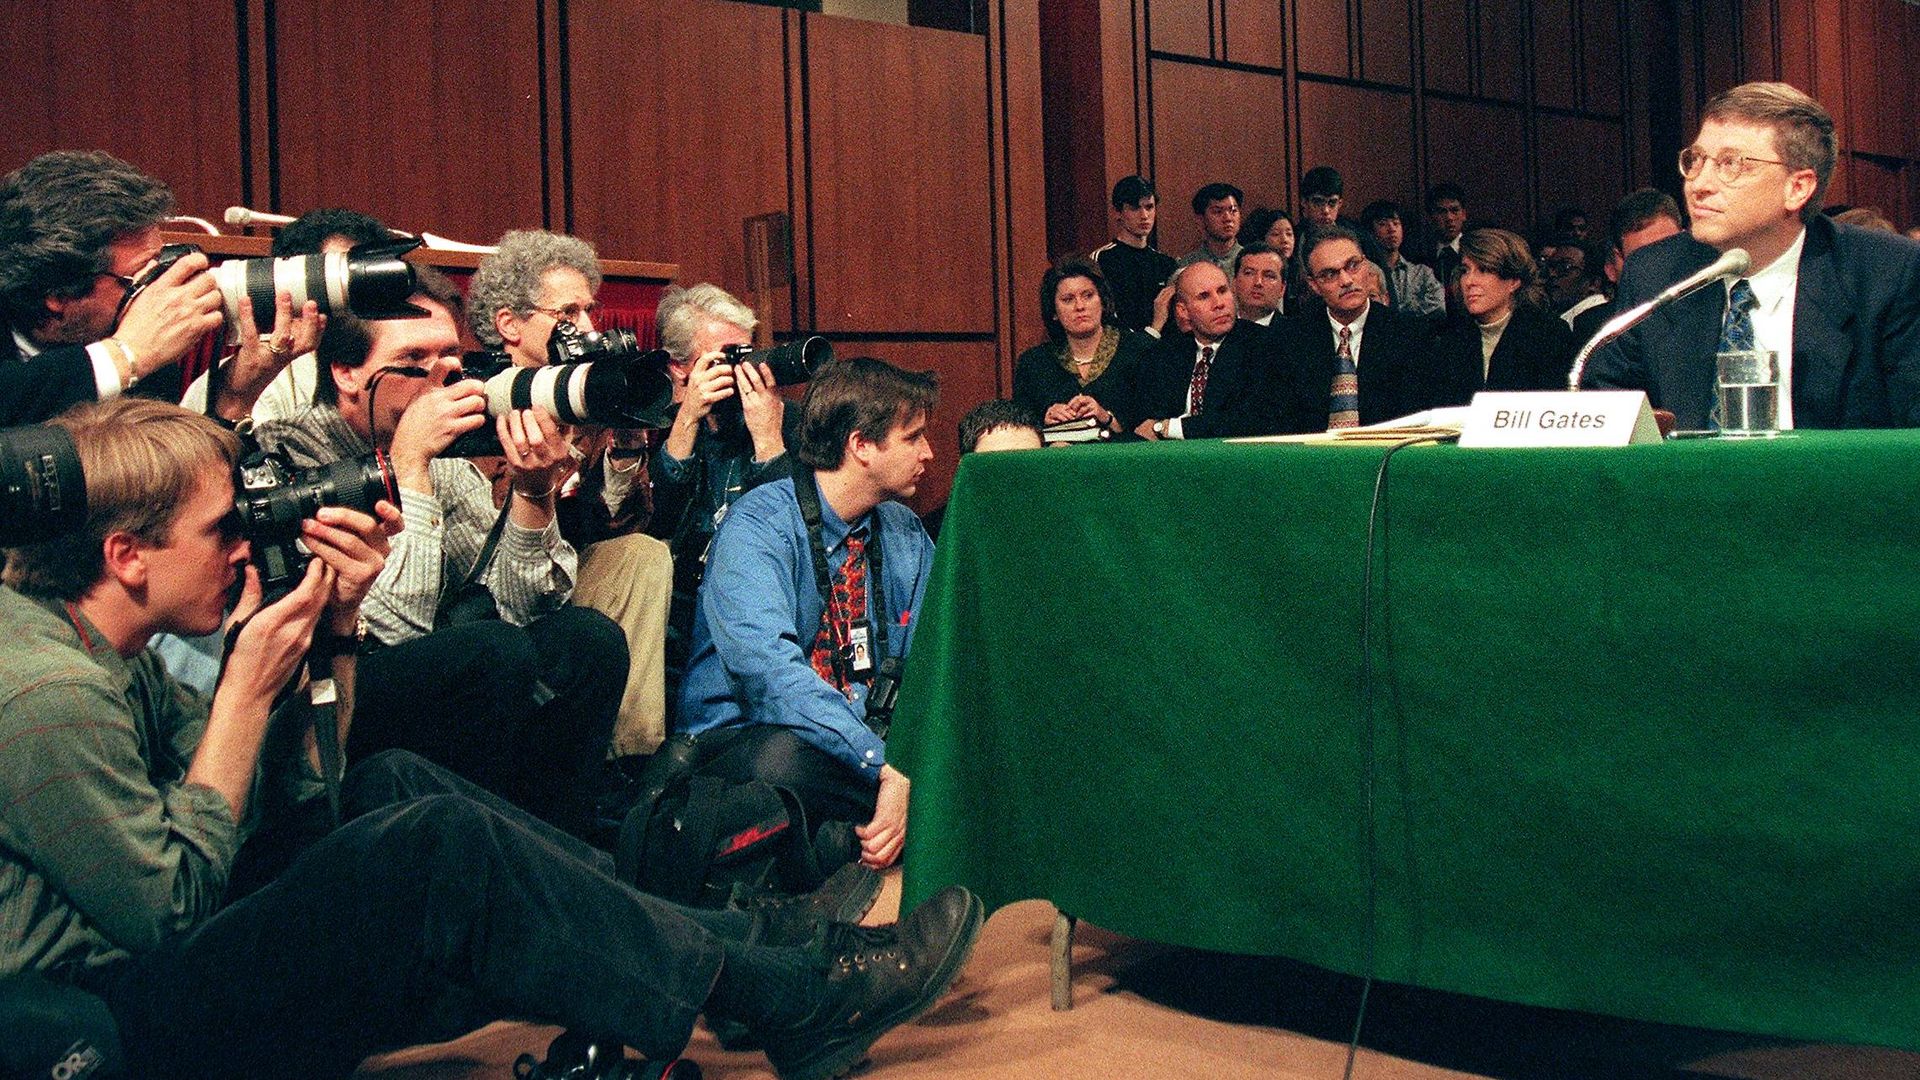 Bill Gates testifying in the 1990s